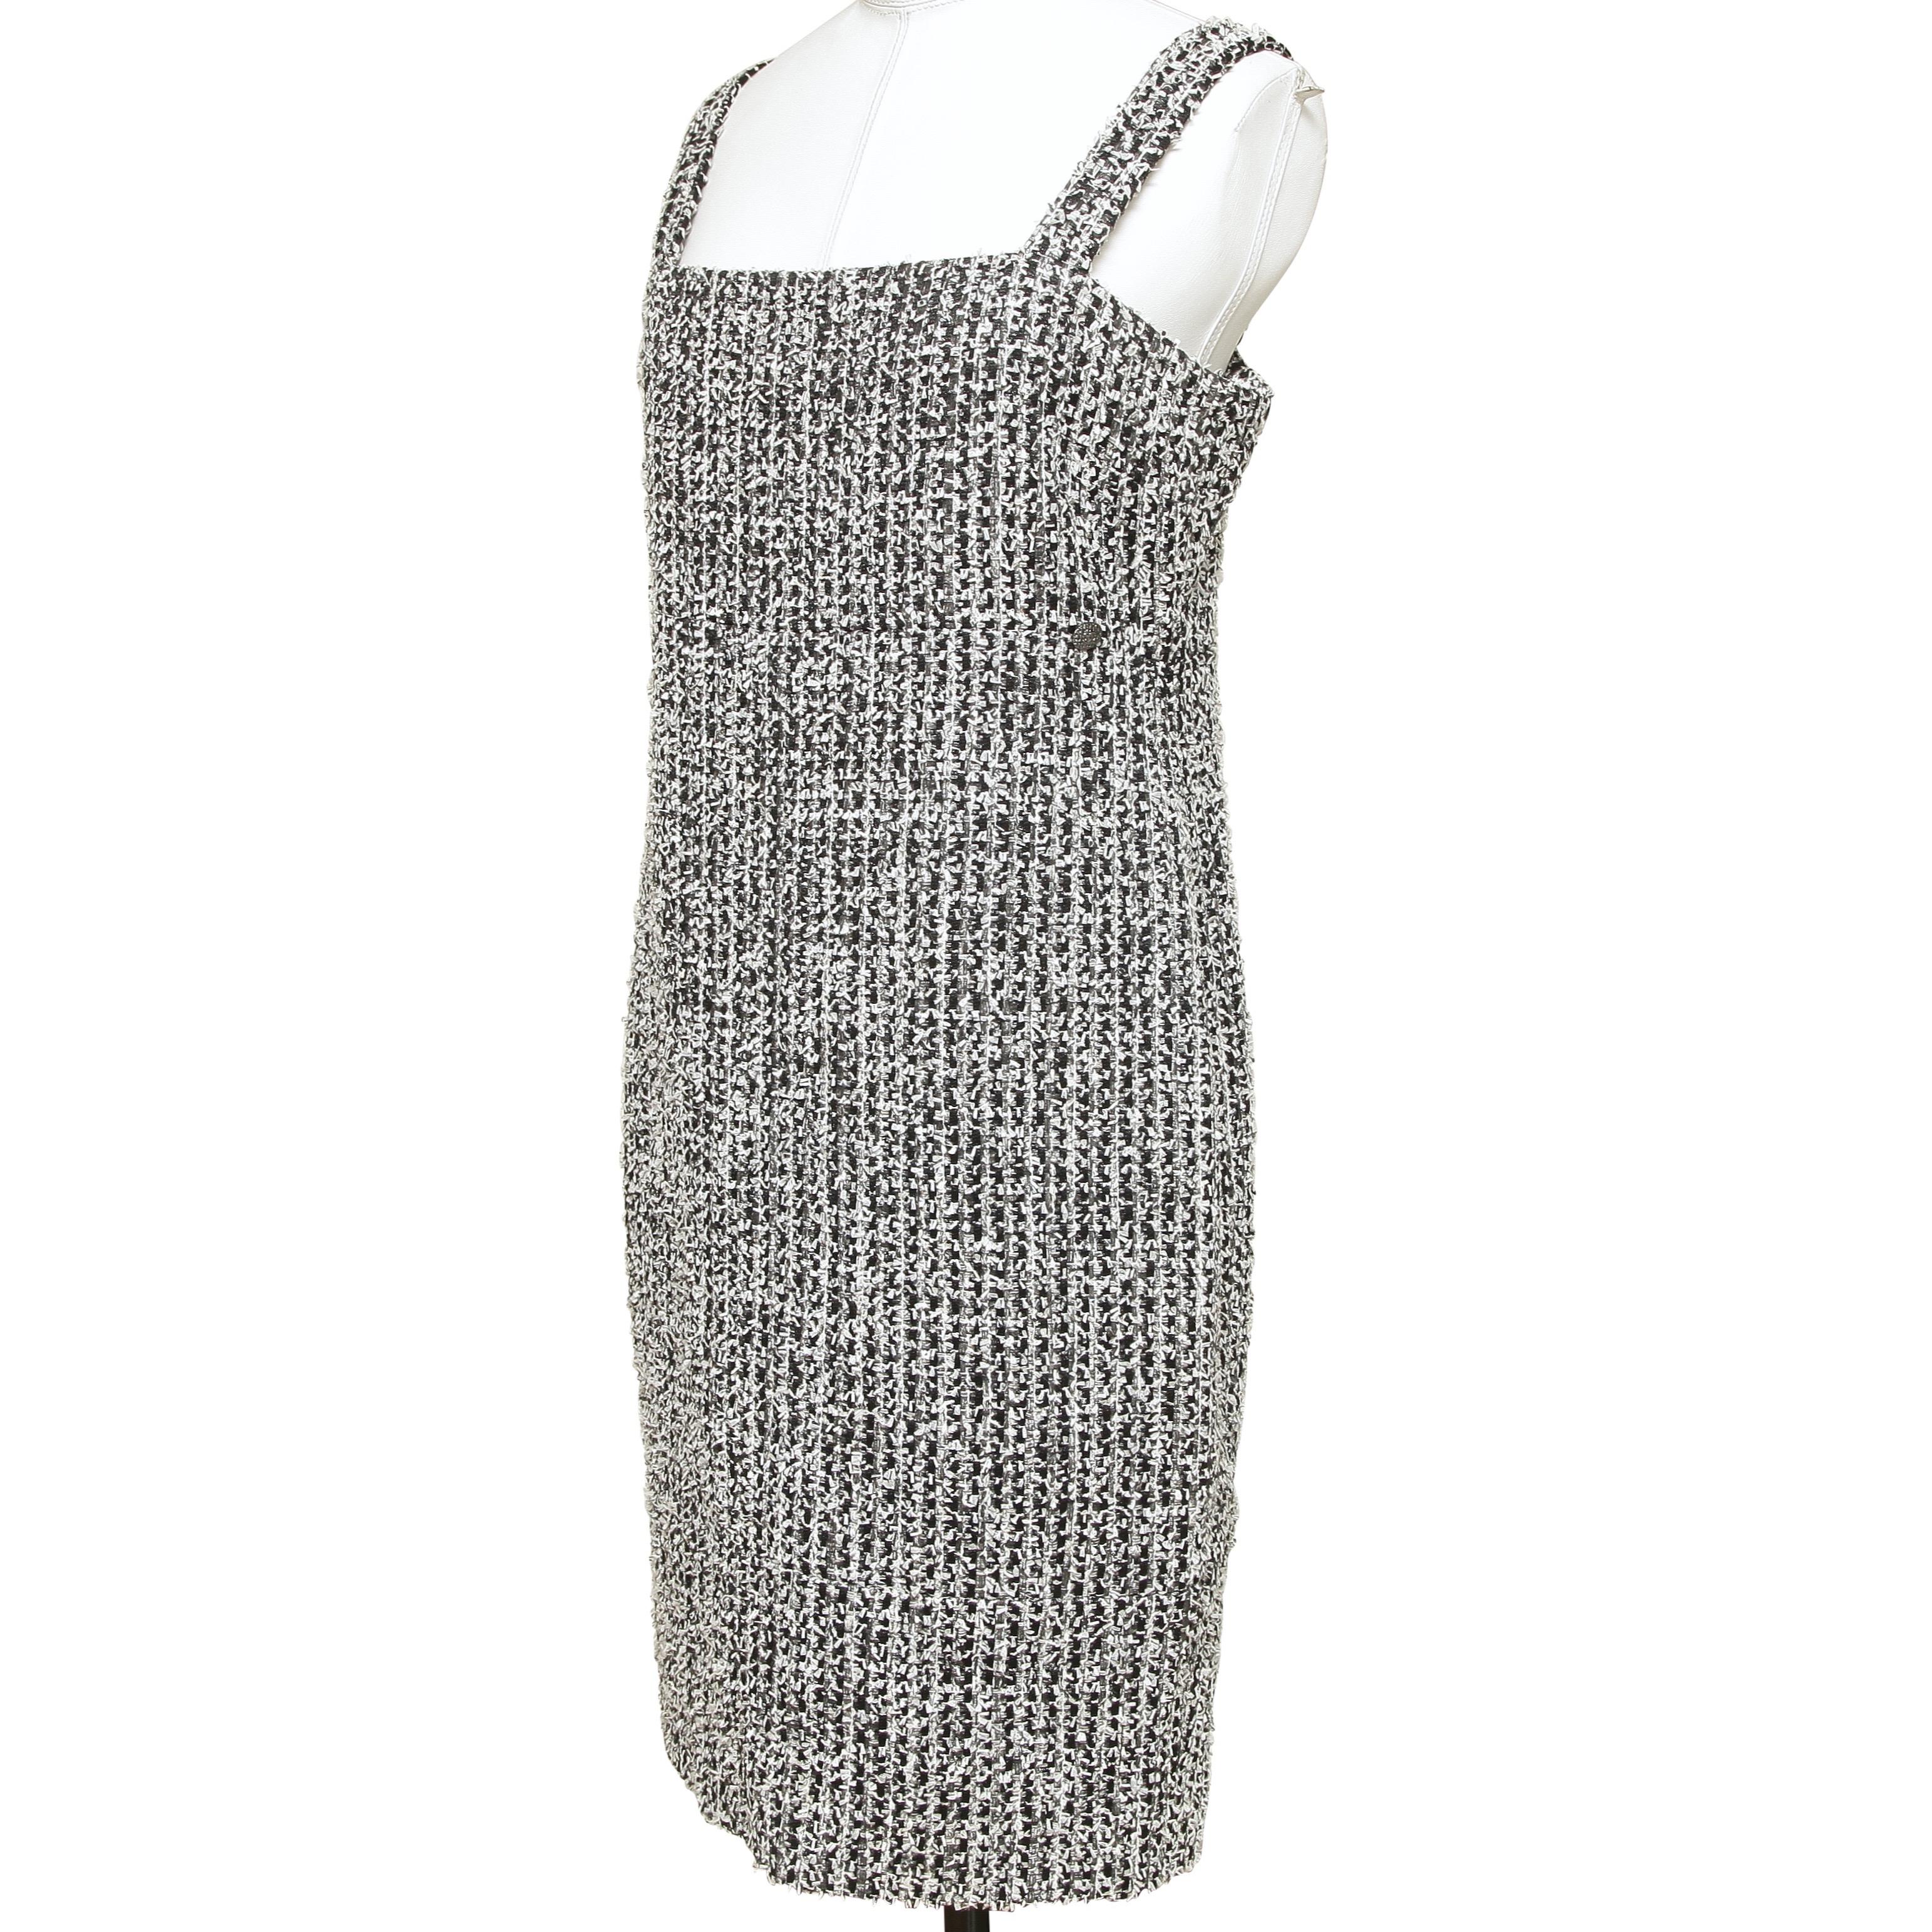 Gray CHANEL Dress Sleeveless Tweed  Black White Fantasy Shift Square Neck Sz 40 2014 For Sale